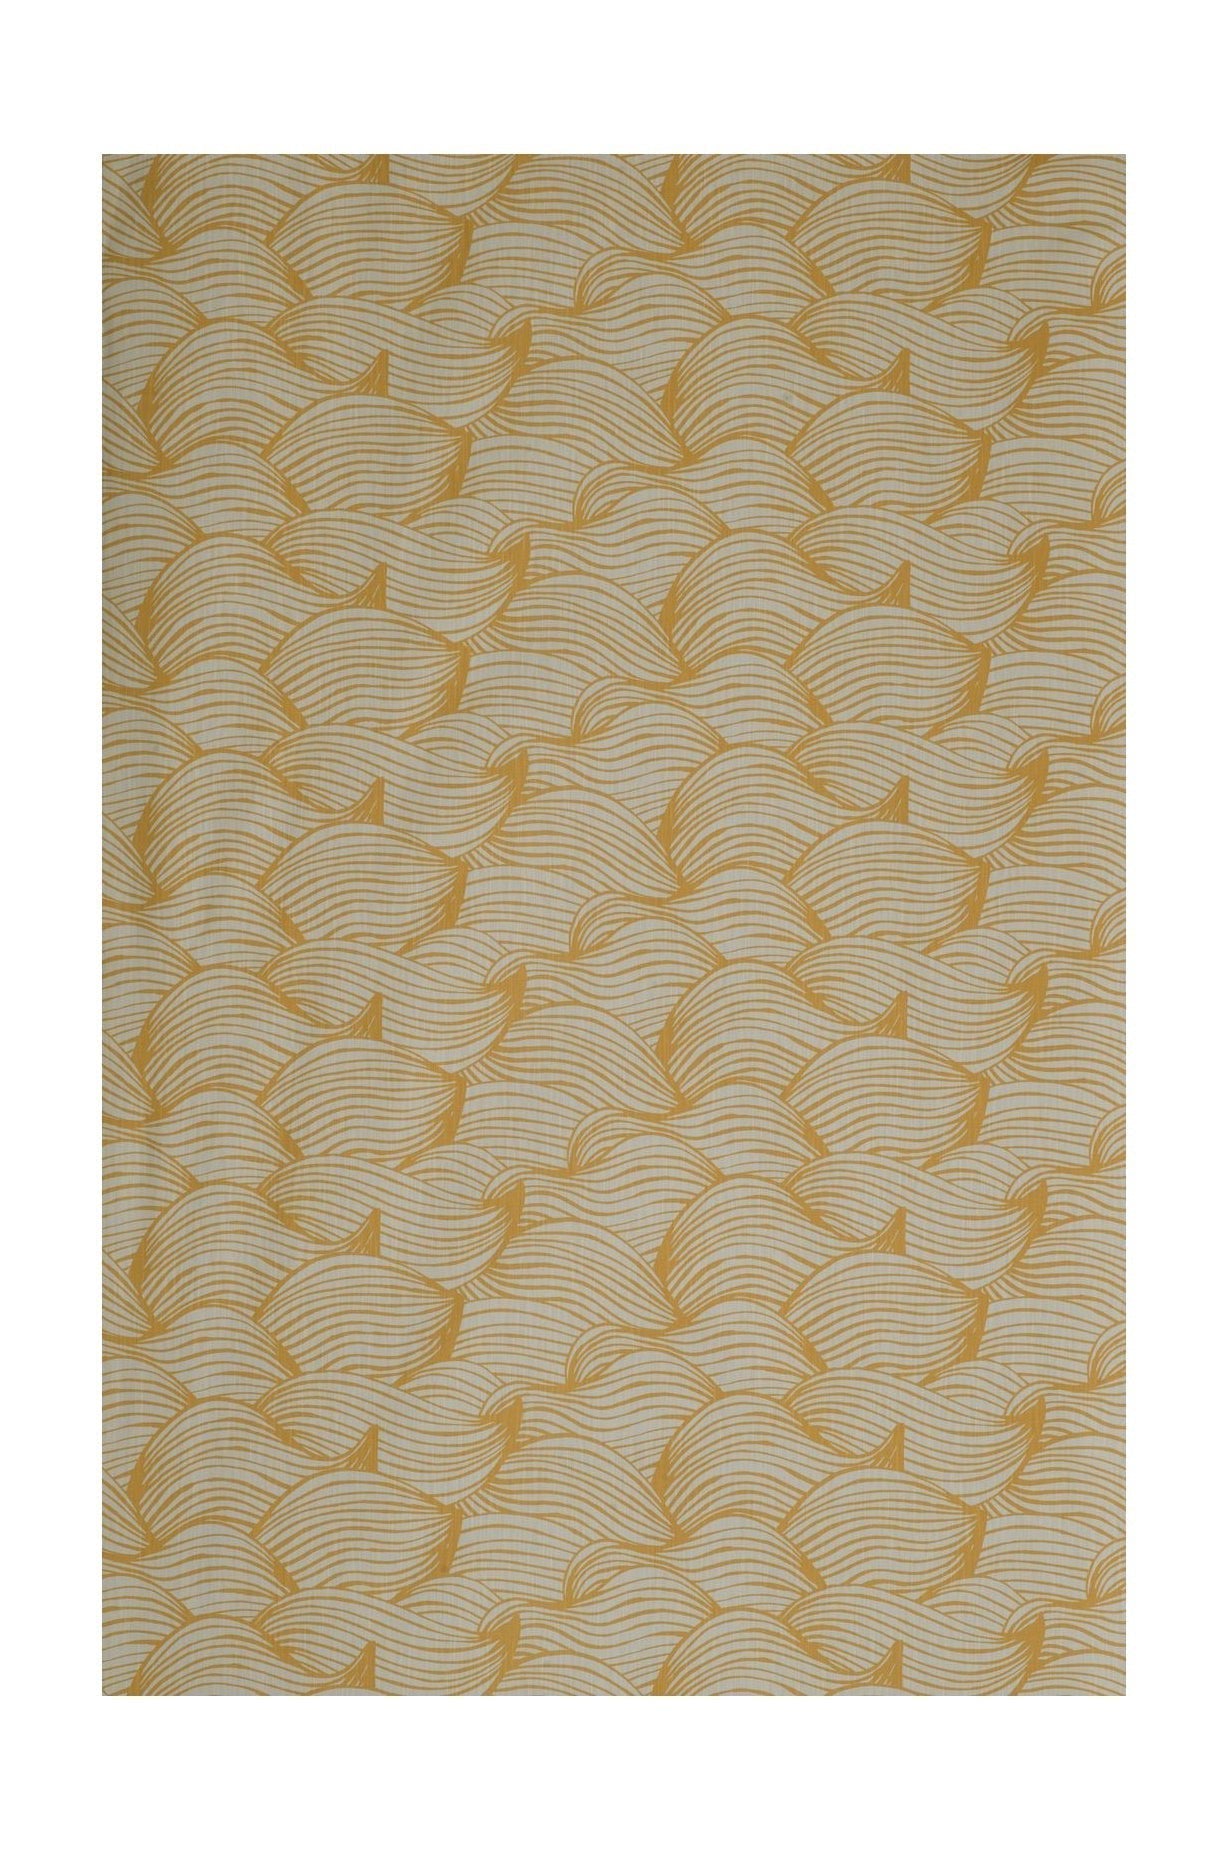 Spira Wave Fabric Width 150 Cm (Price Per Meter), Honey